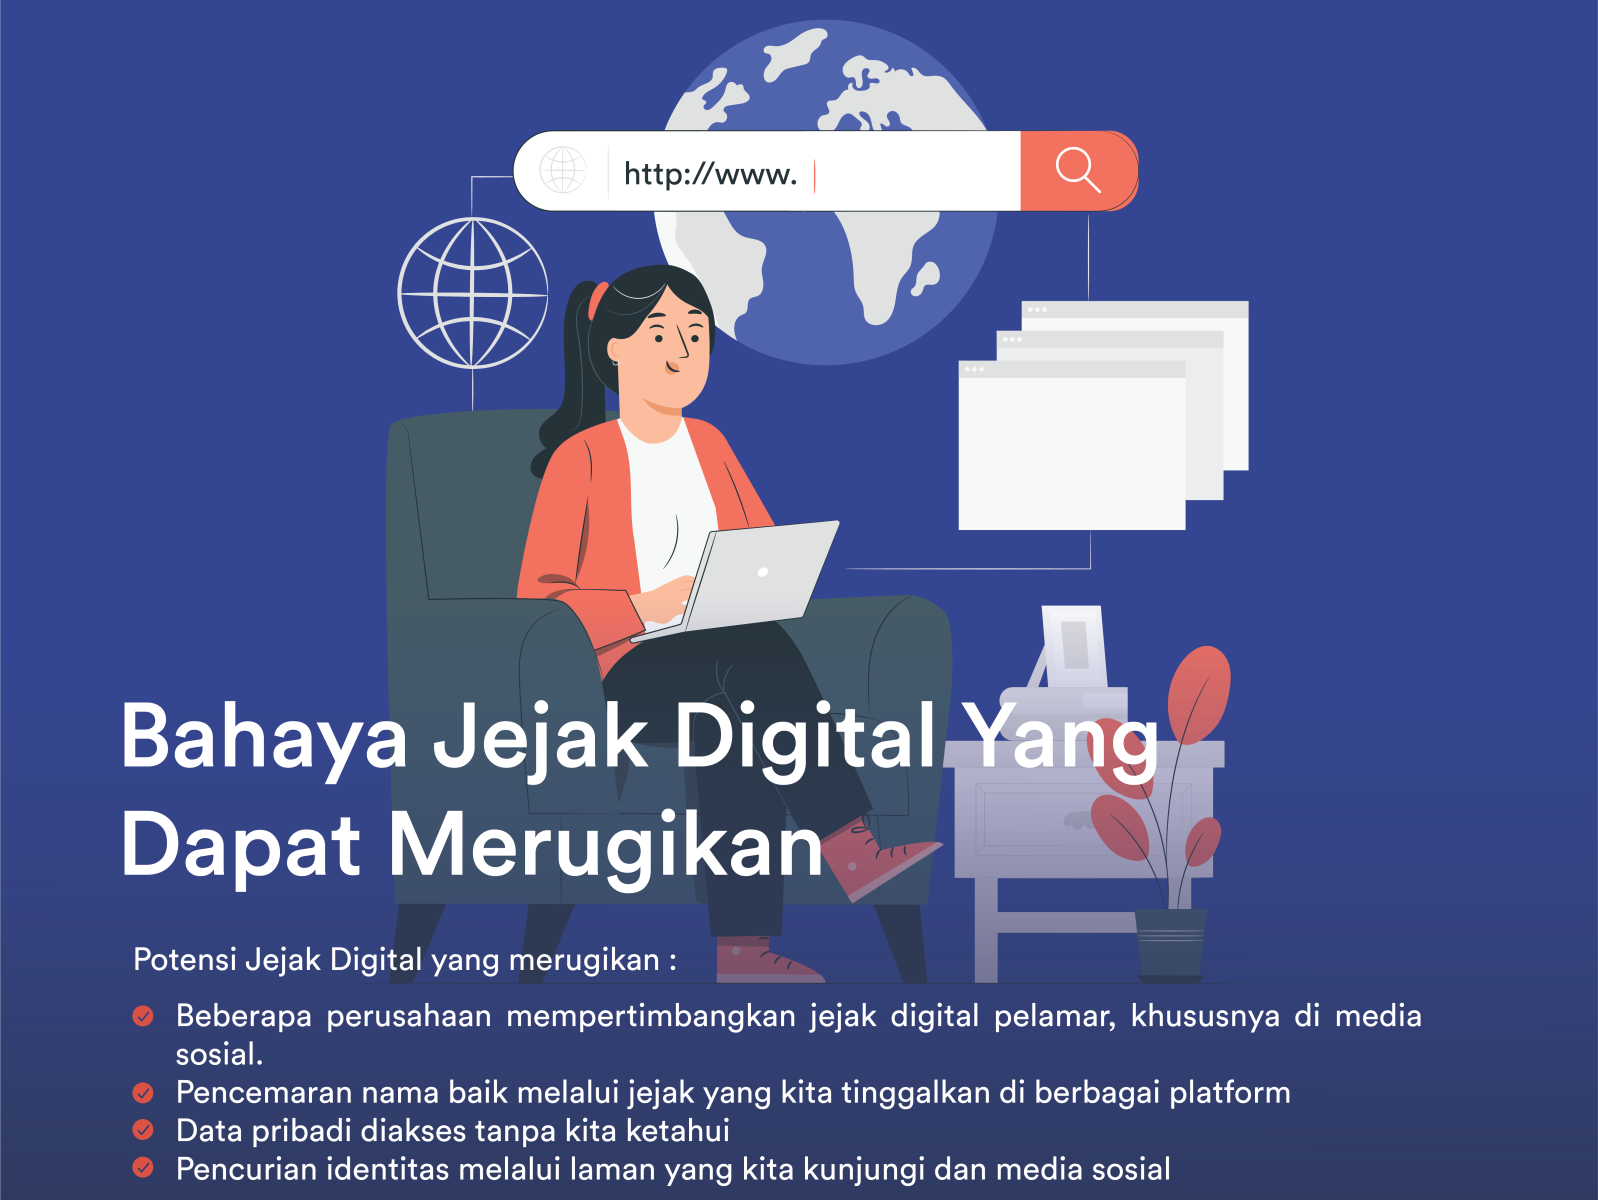 Bahaya Jejak Digital by Taufik Ismail on Dribbble